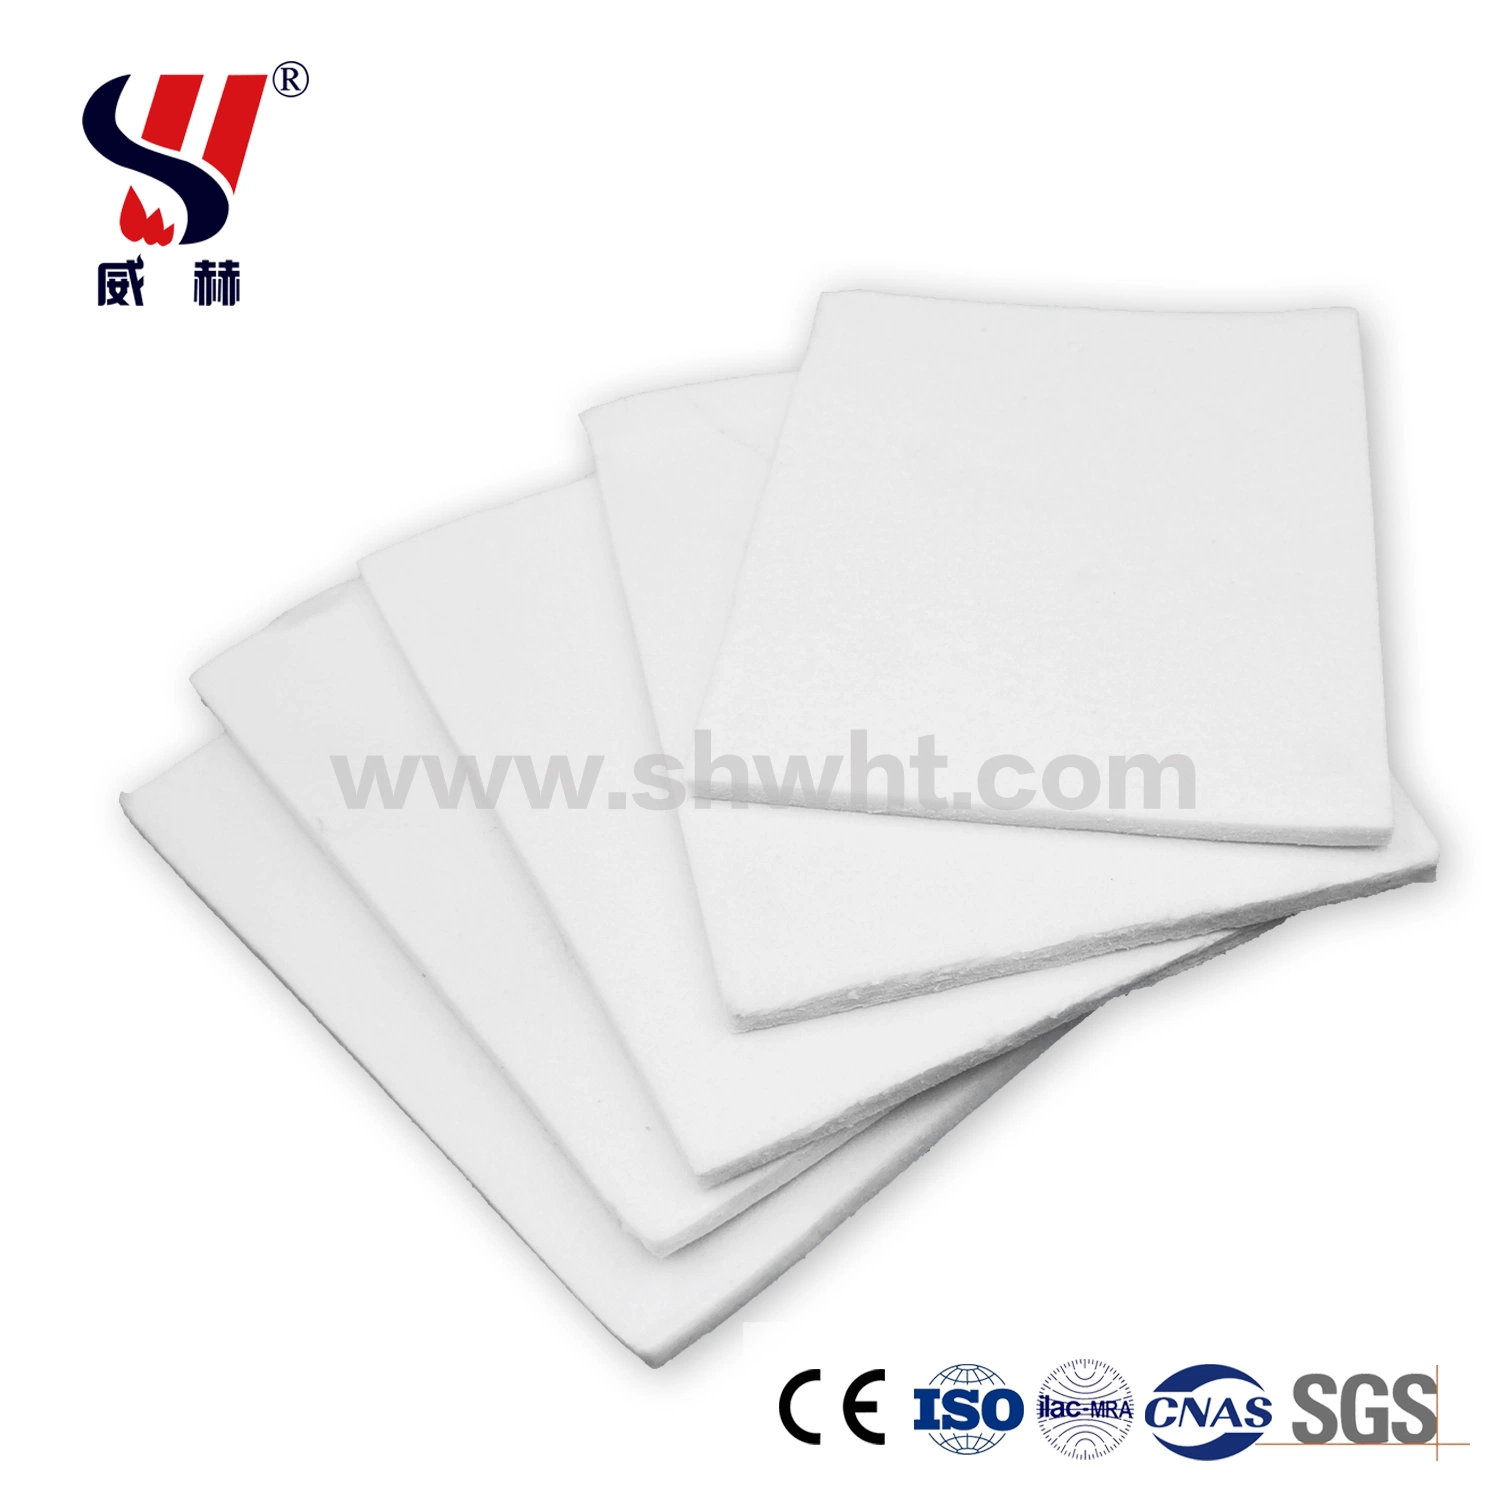 Aluminum-Foil-Coated Aerogel Insulation Blanket for Heat Insulation